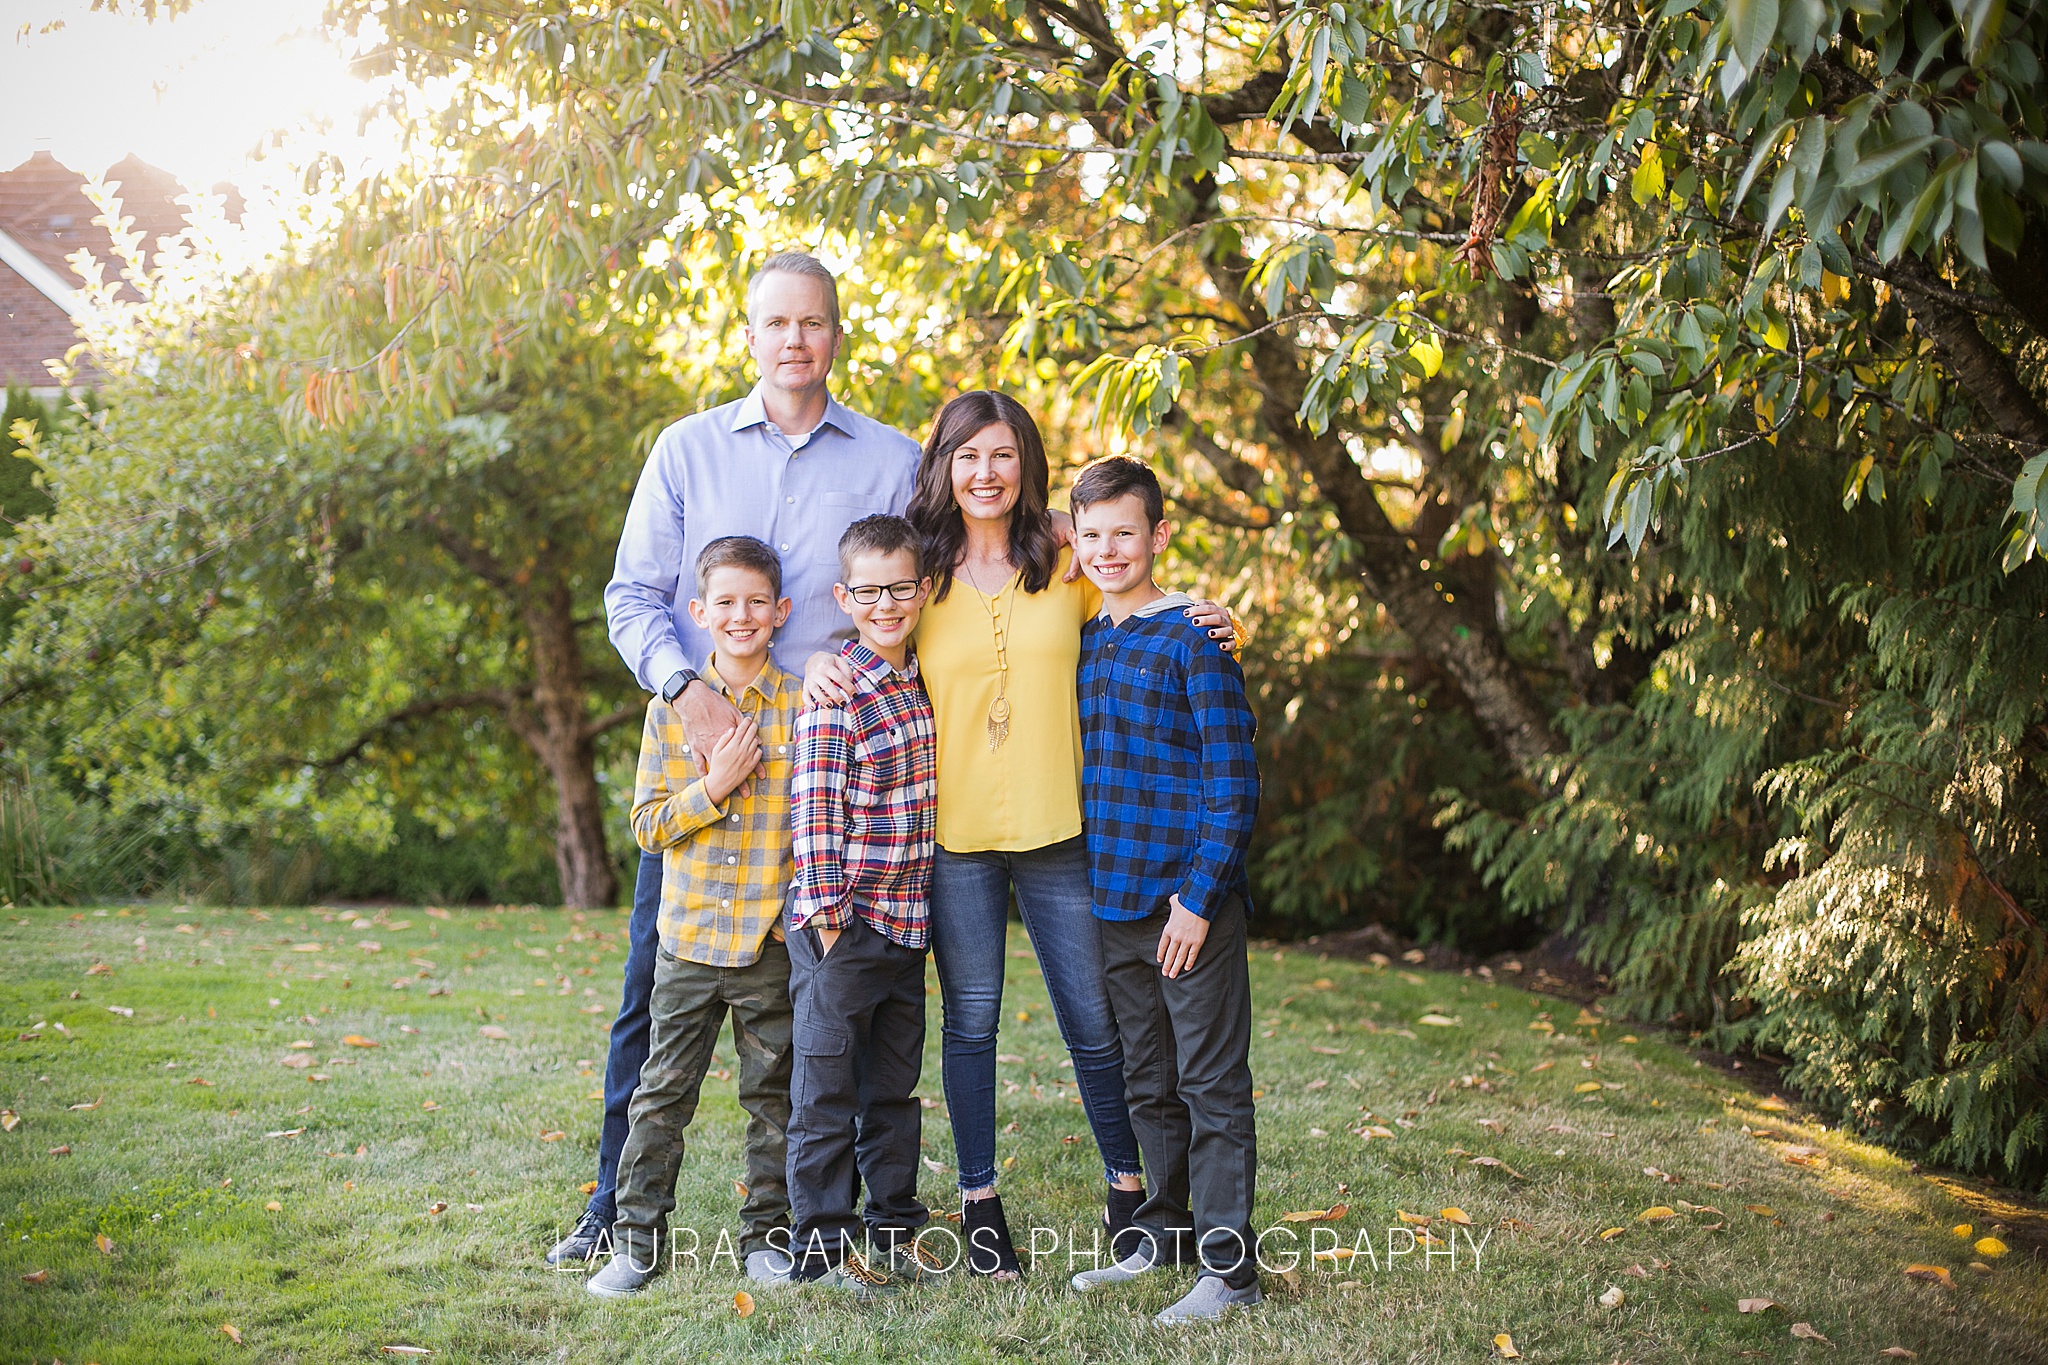 Laura Santos Photography Portland Oregon Family Photographer_0719.jpg